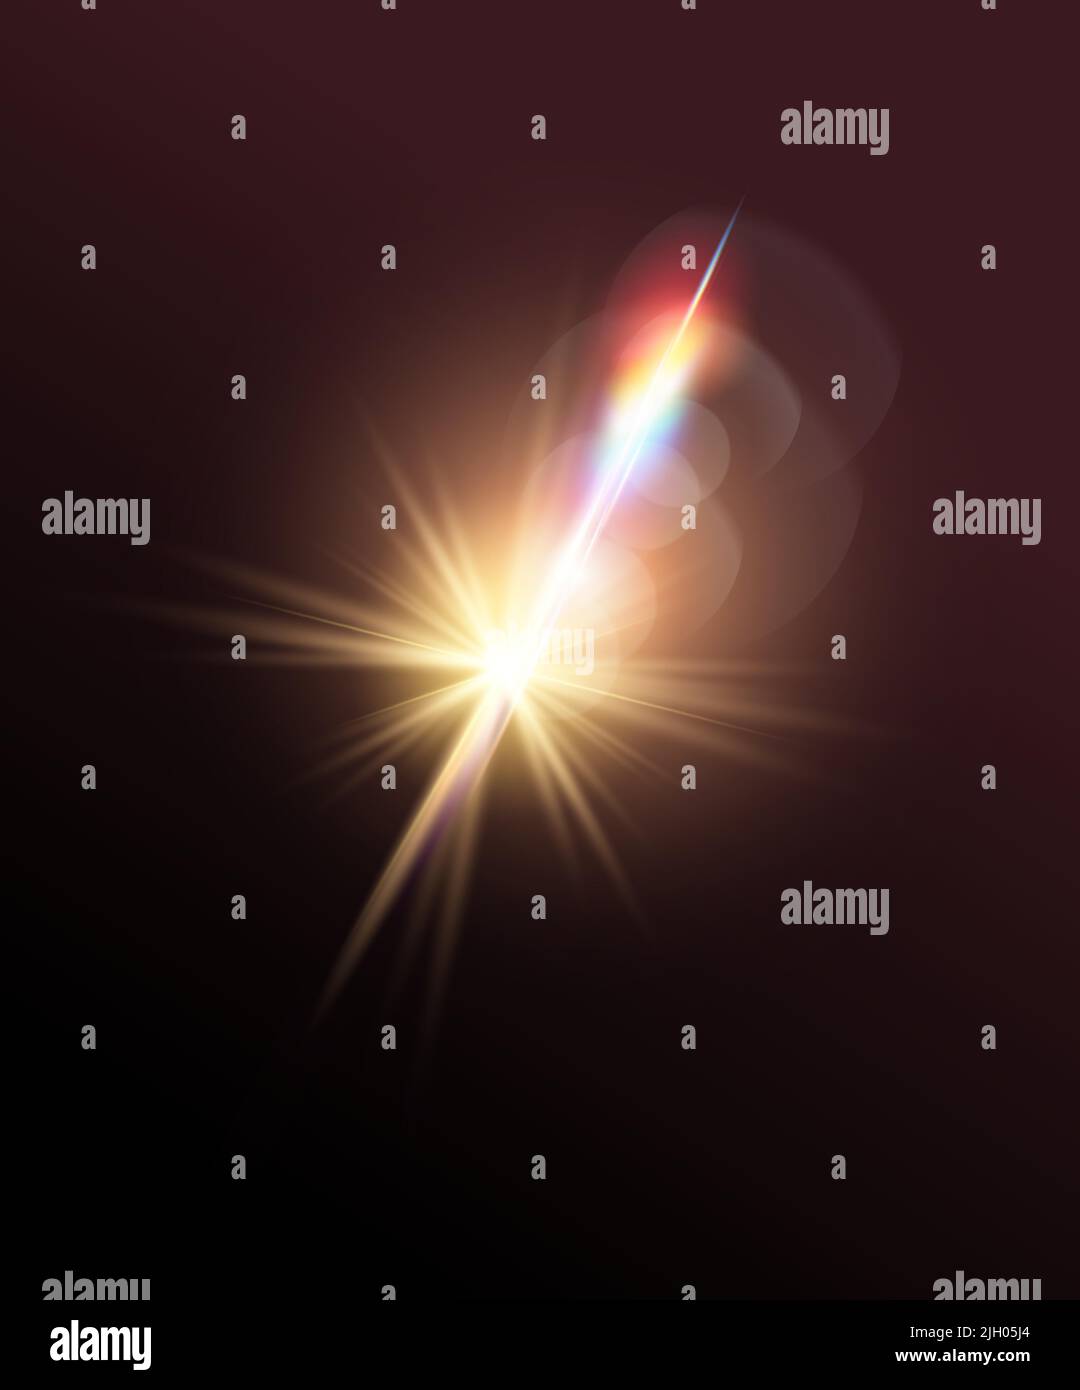 Transparent sun lens flare effect. Vector illustration. Stock Vector